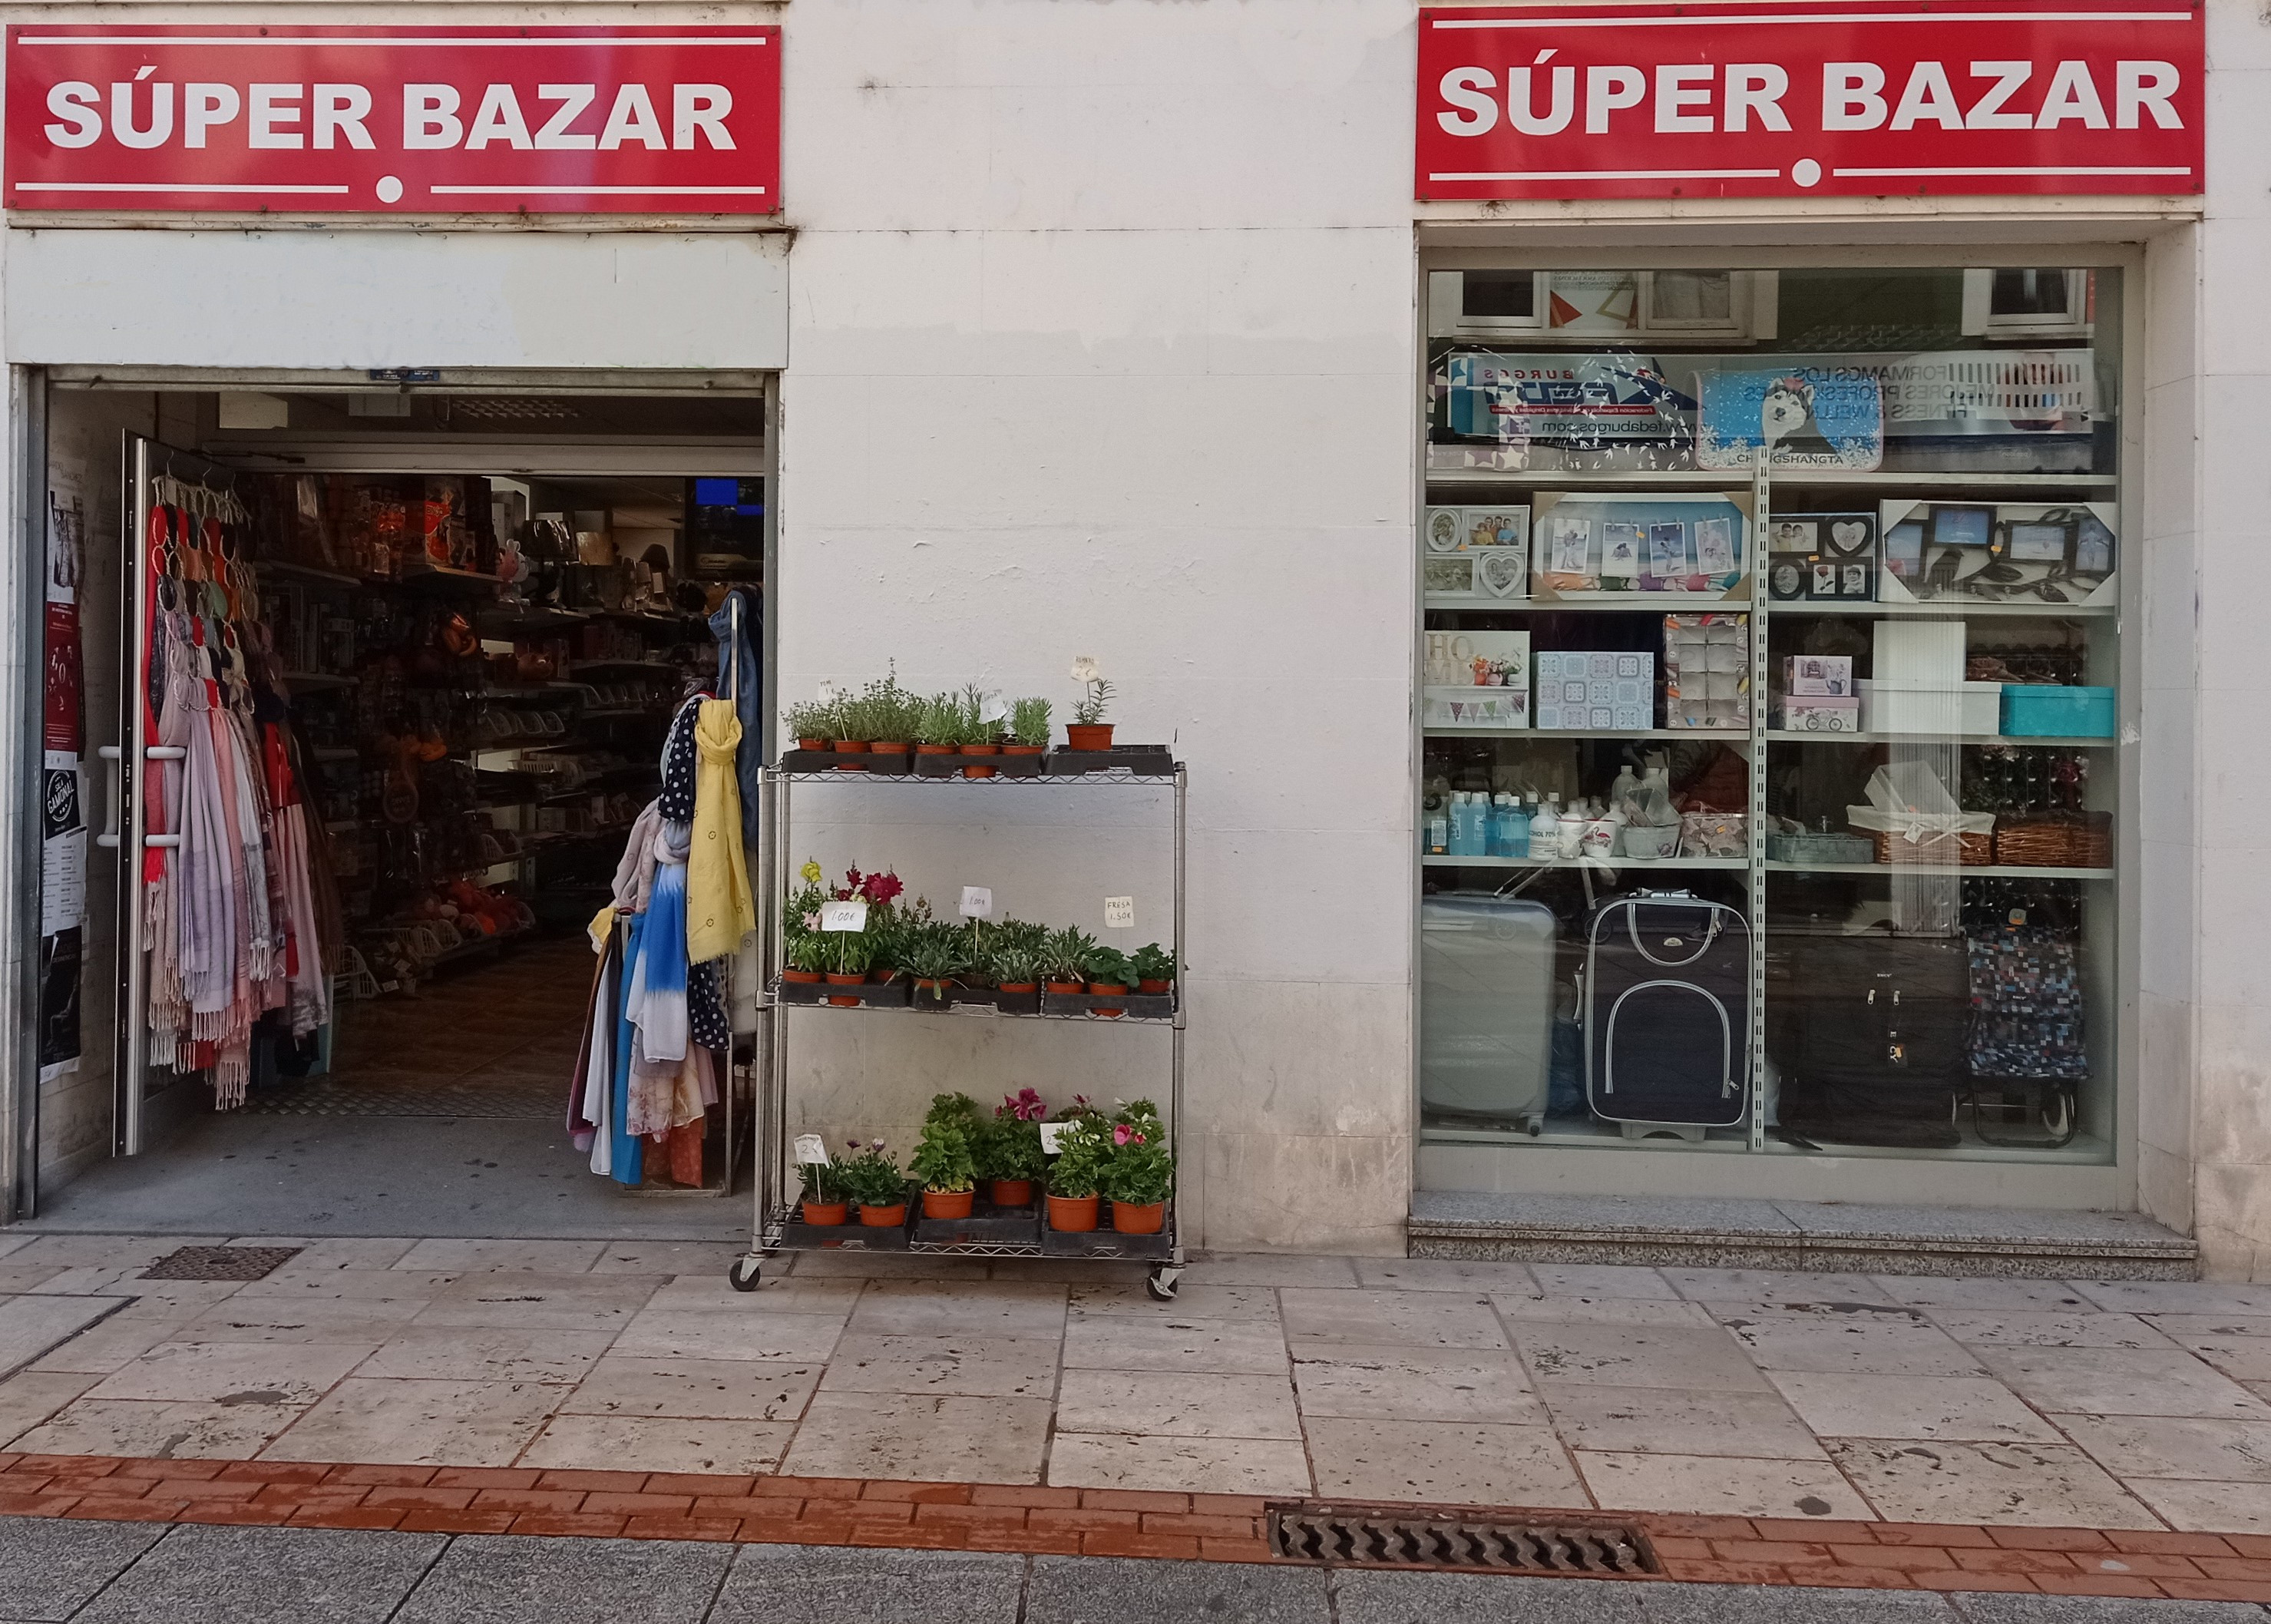 Super Bazar